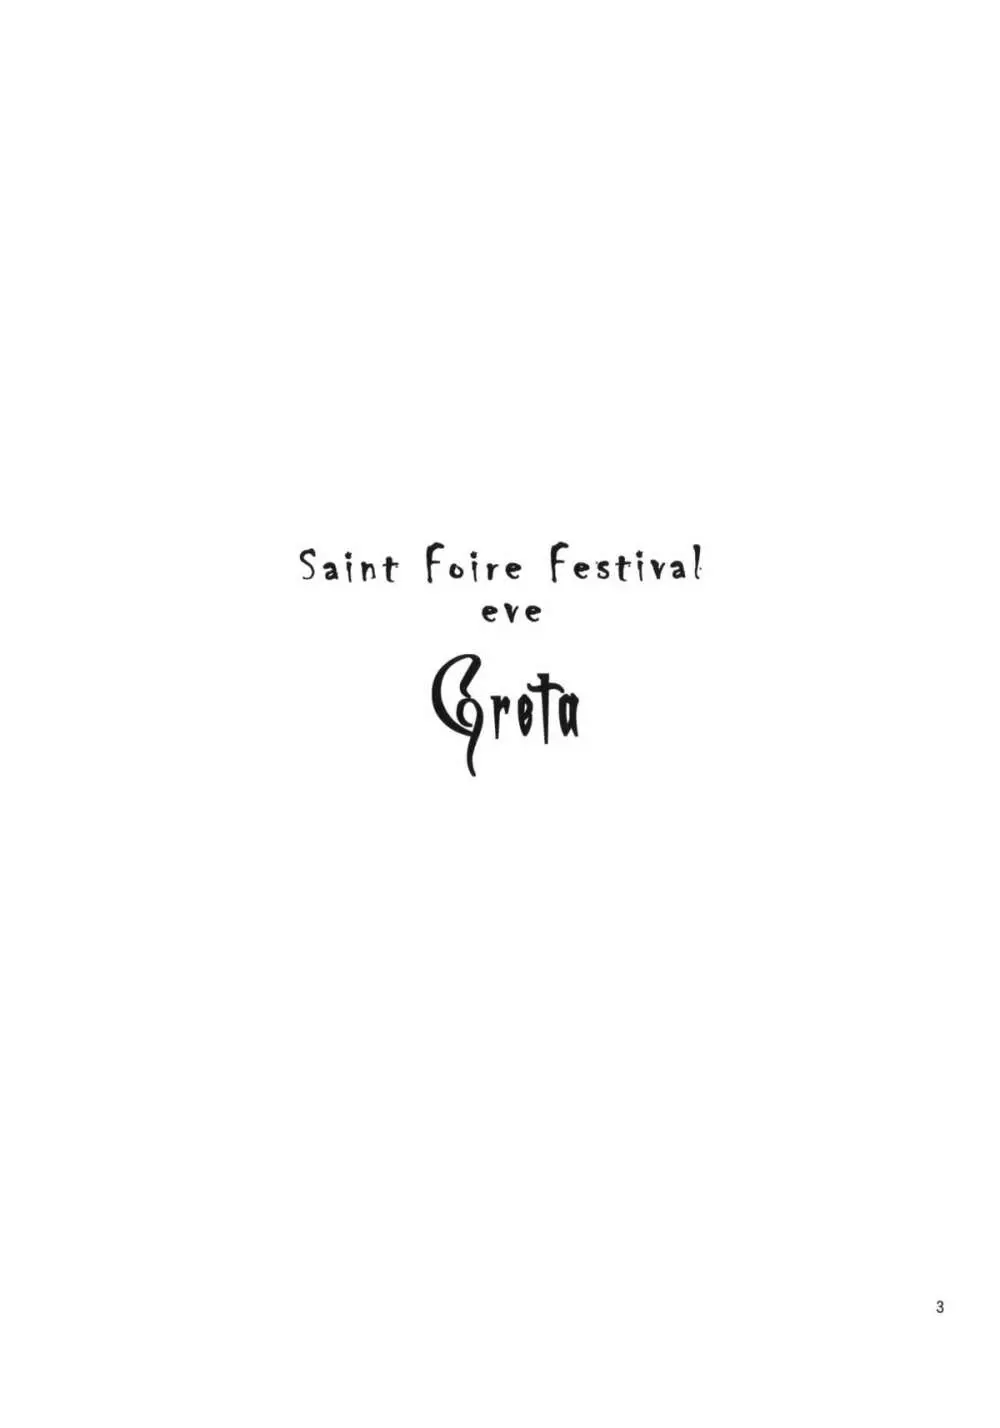 Saint Foire Festival eve・Greta 2ページ